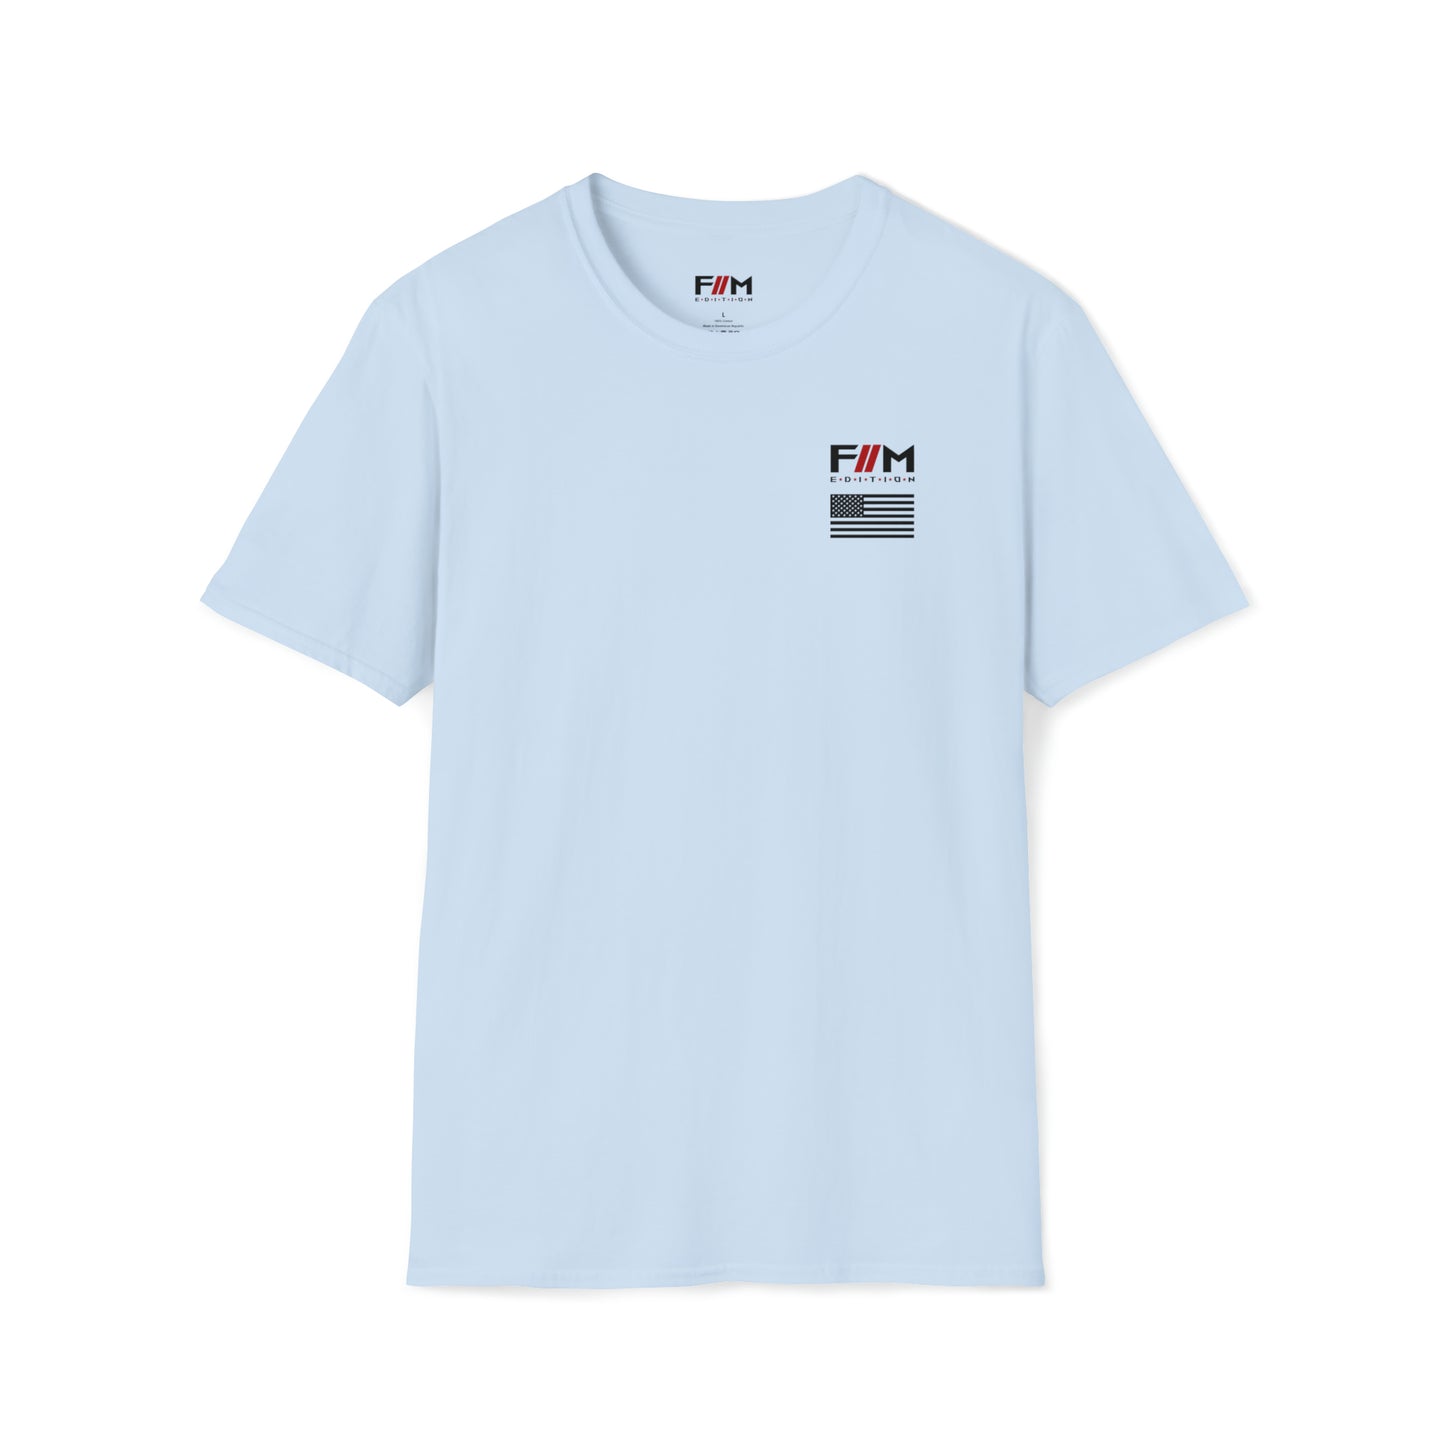 Forgotten Man Edition Softstyle T-Shirt